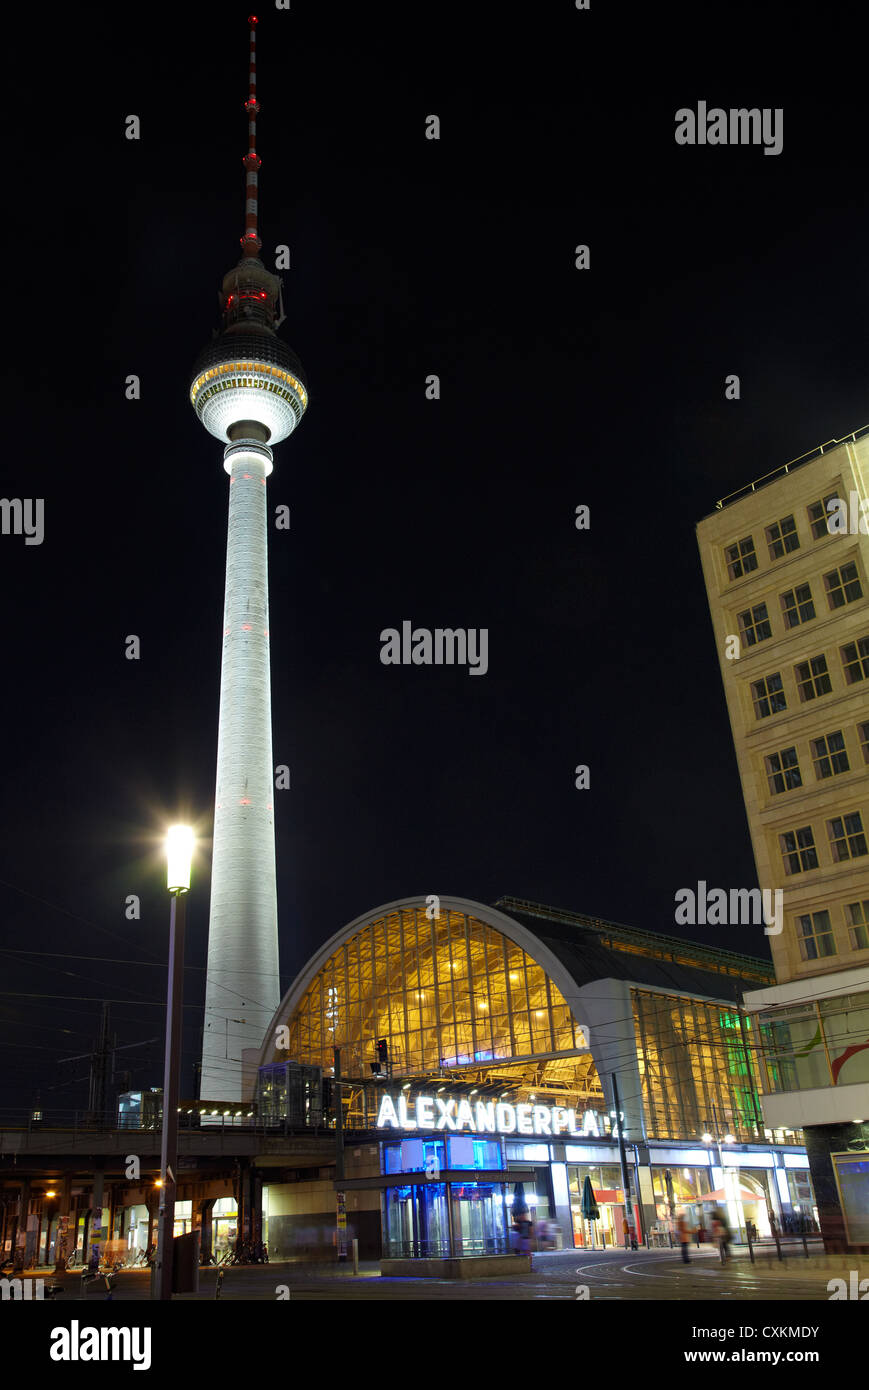 Alexanderplatz, Fernsehturm bei Nacht, Berlin Stockfoto